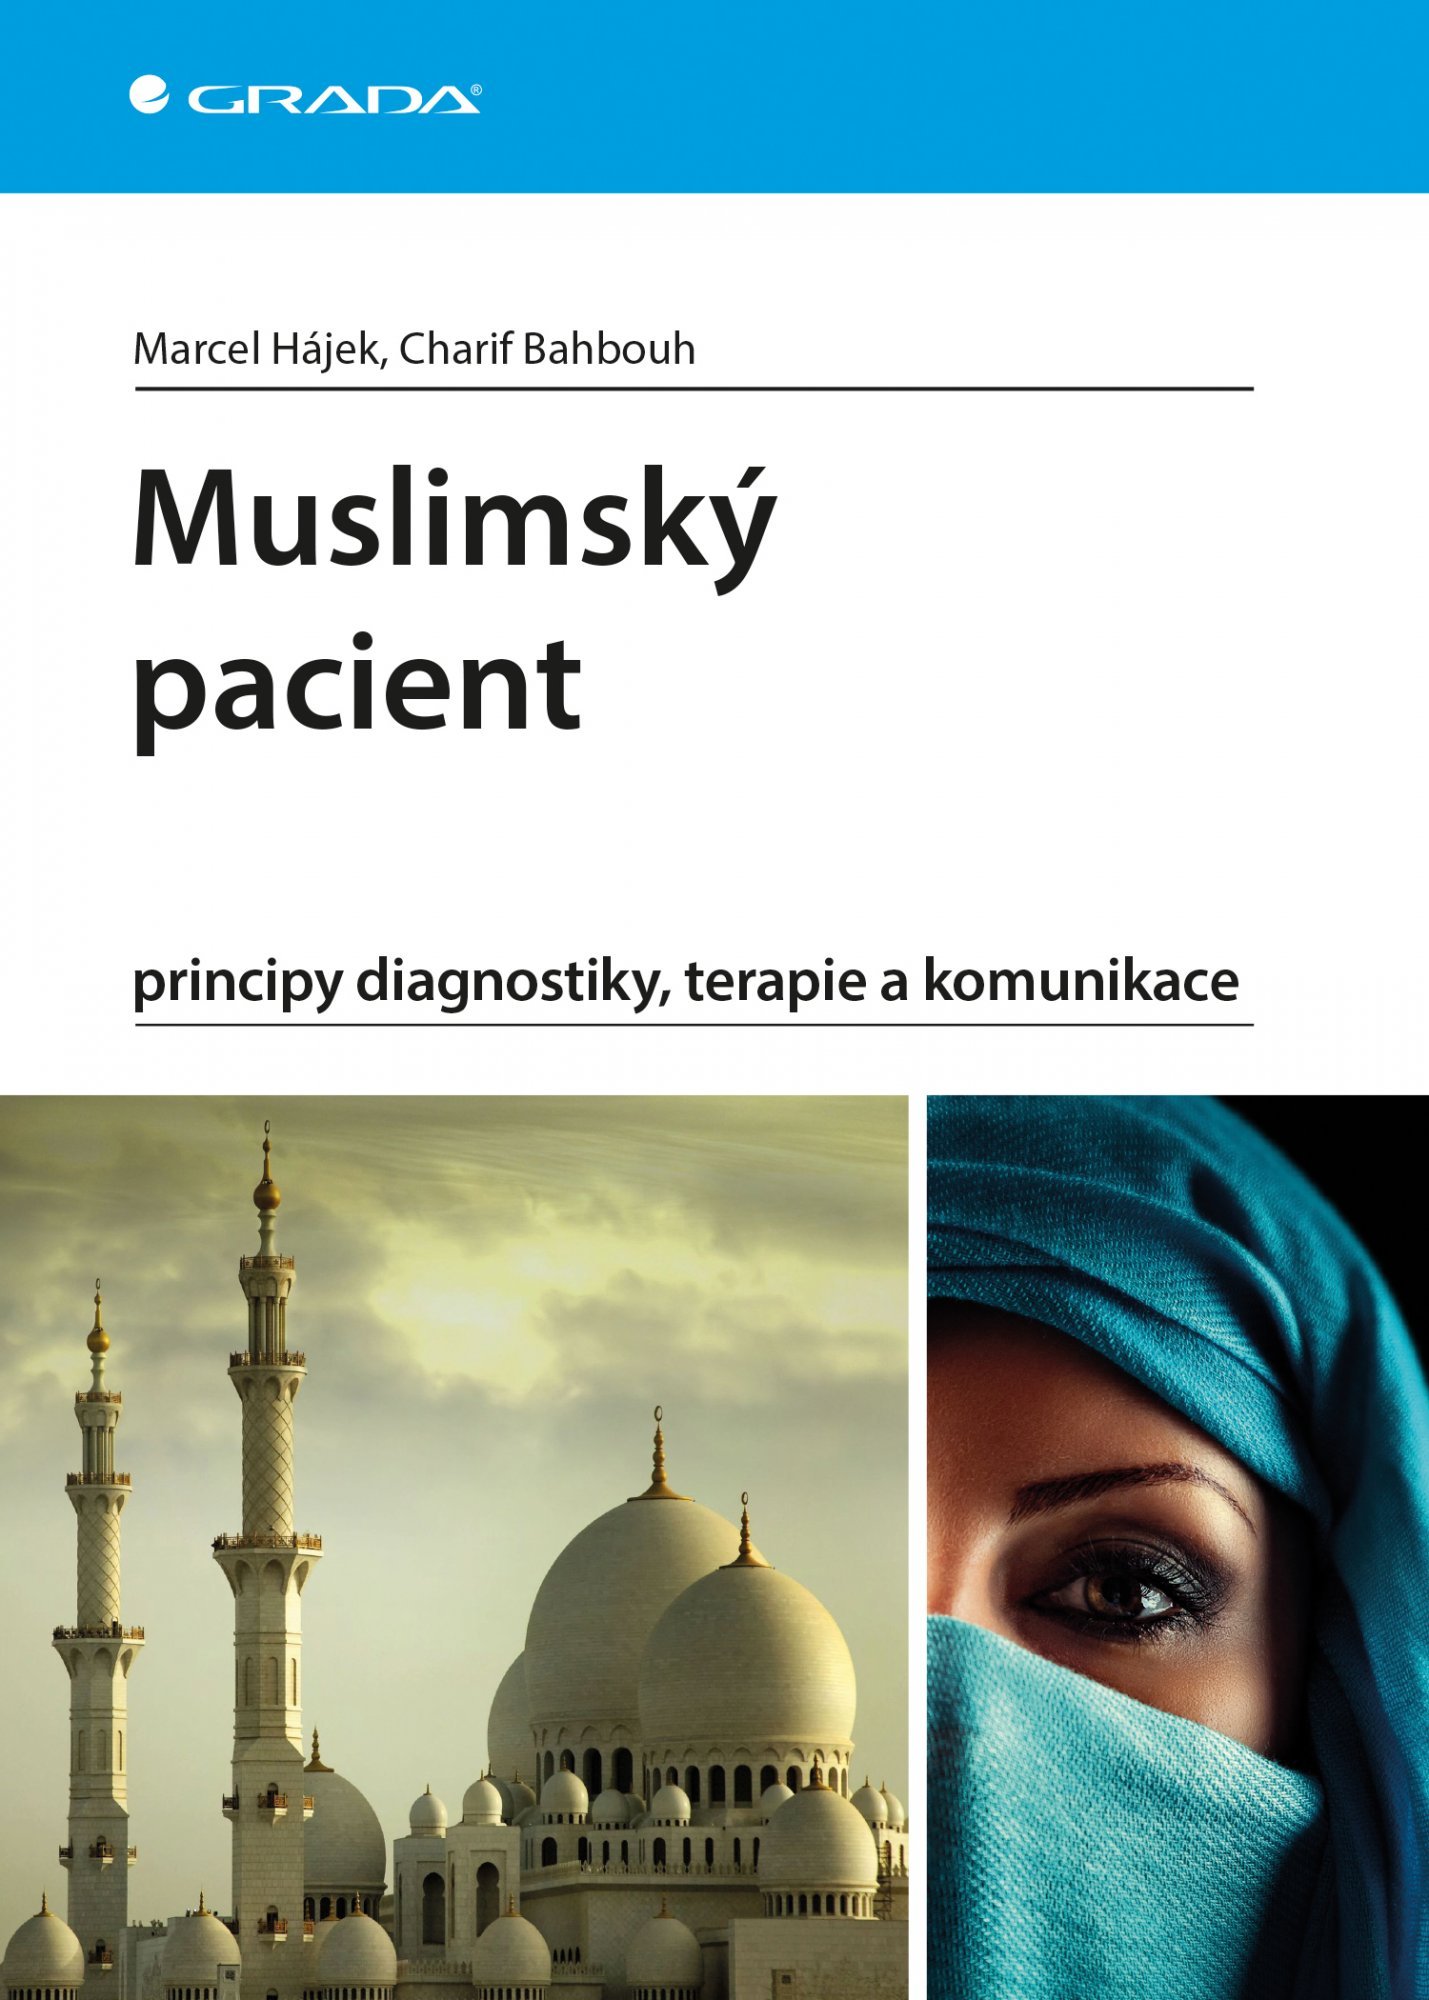 Muslimský pacient - principy diagnostiky, terapie a komunikace - Charif Bahbouh